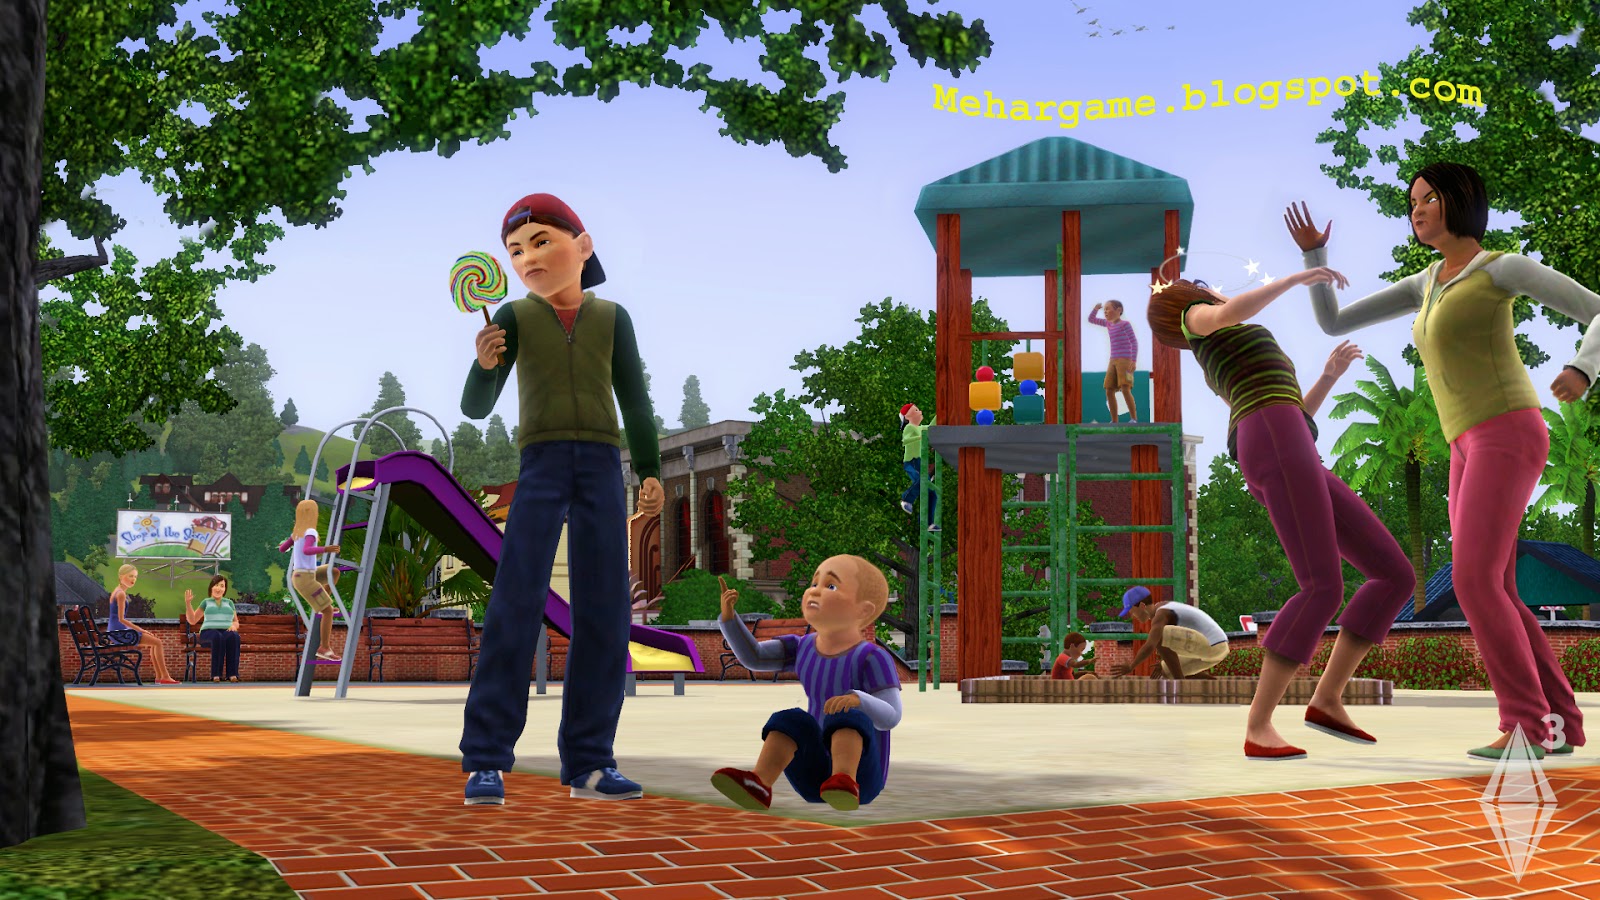 Sims 3 PC Game Free Download (Sims Supernatural) | Free PC Games ...